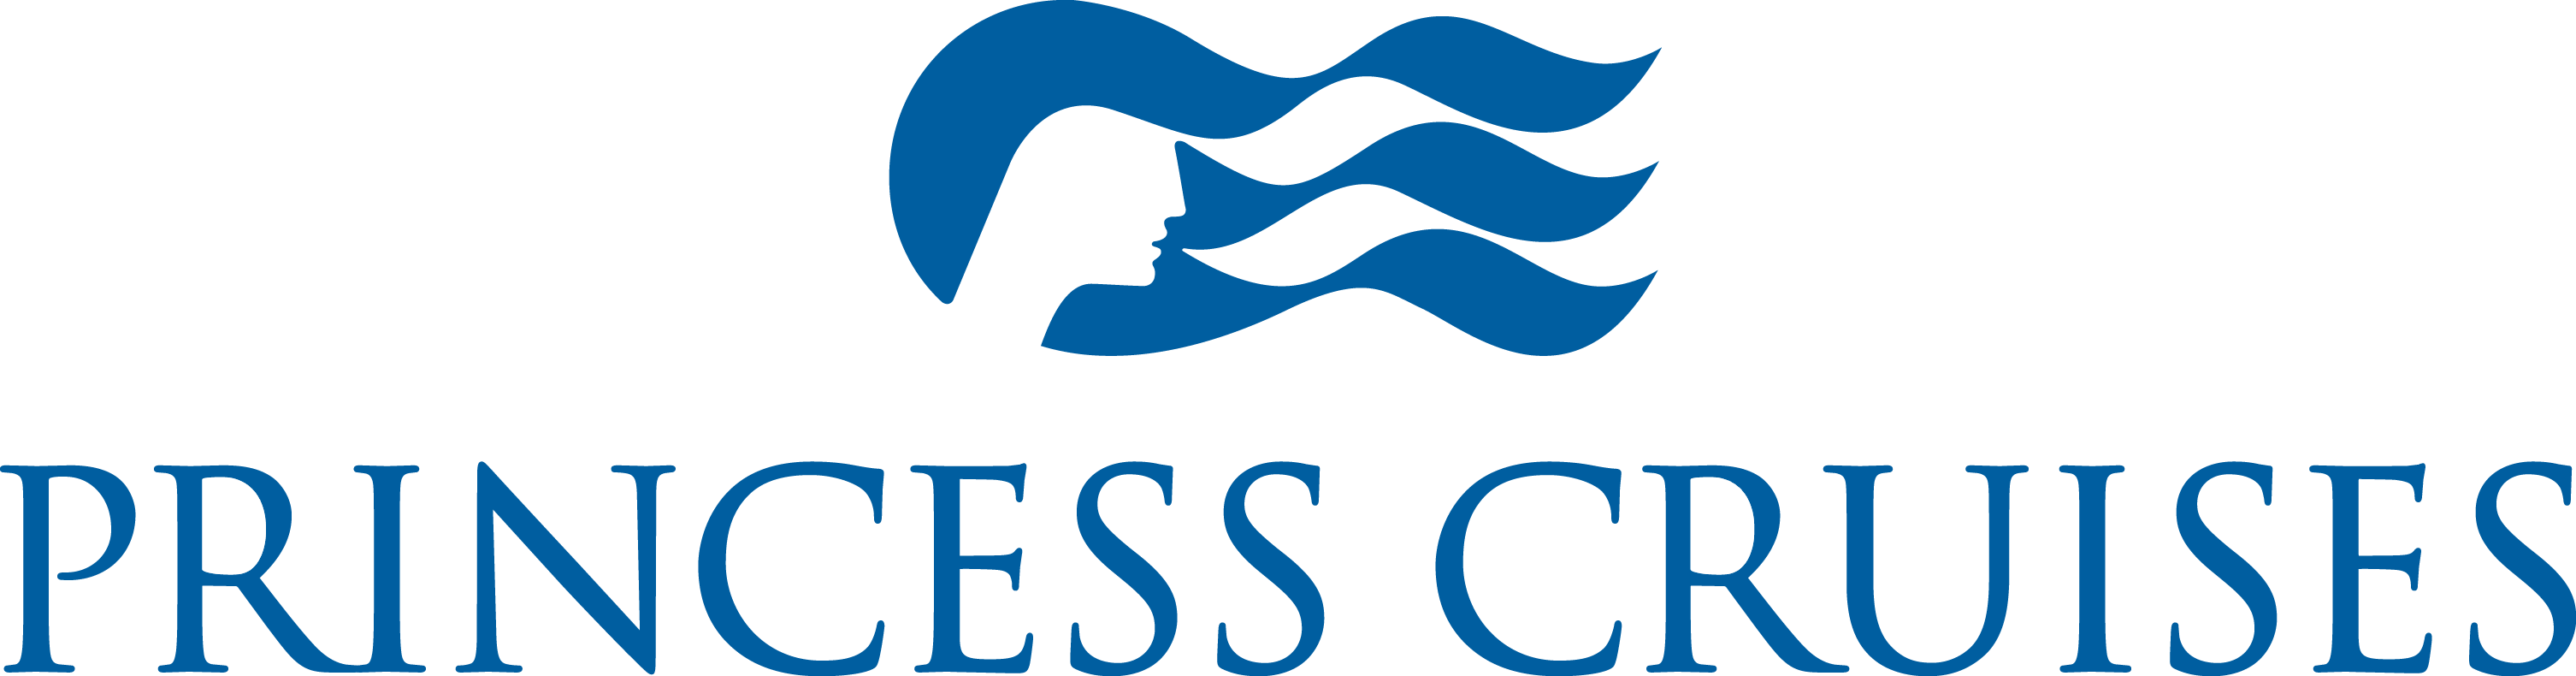 Princess-Cruises-logo